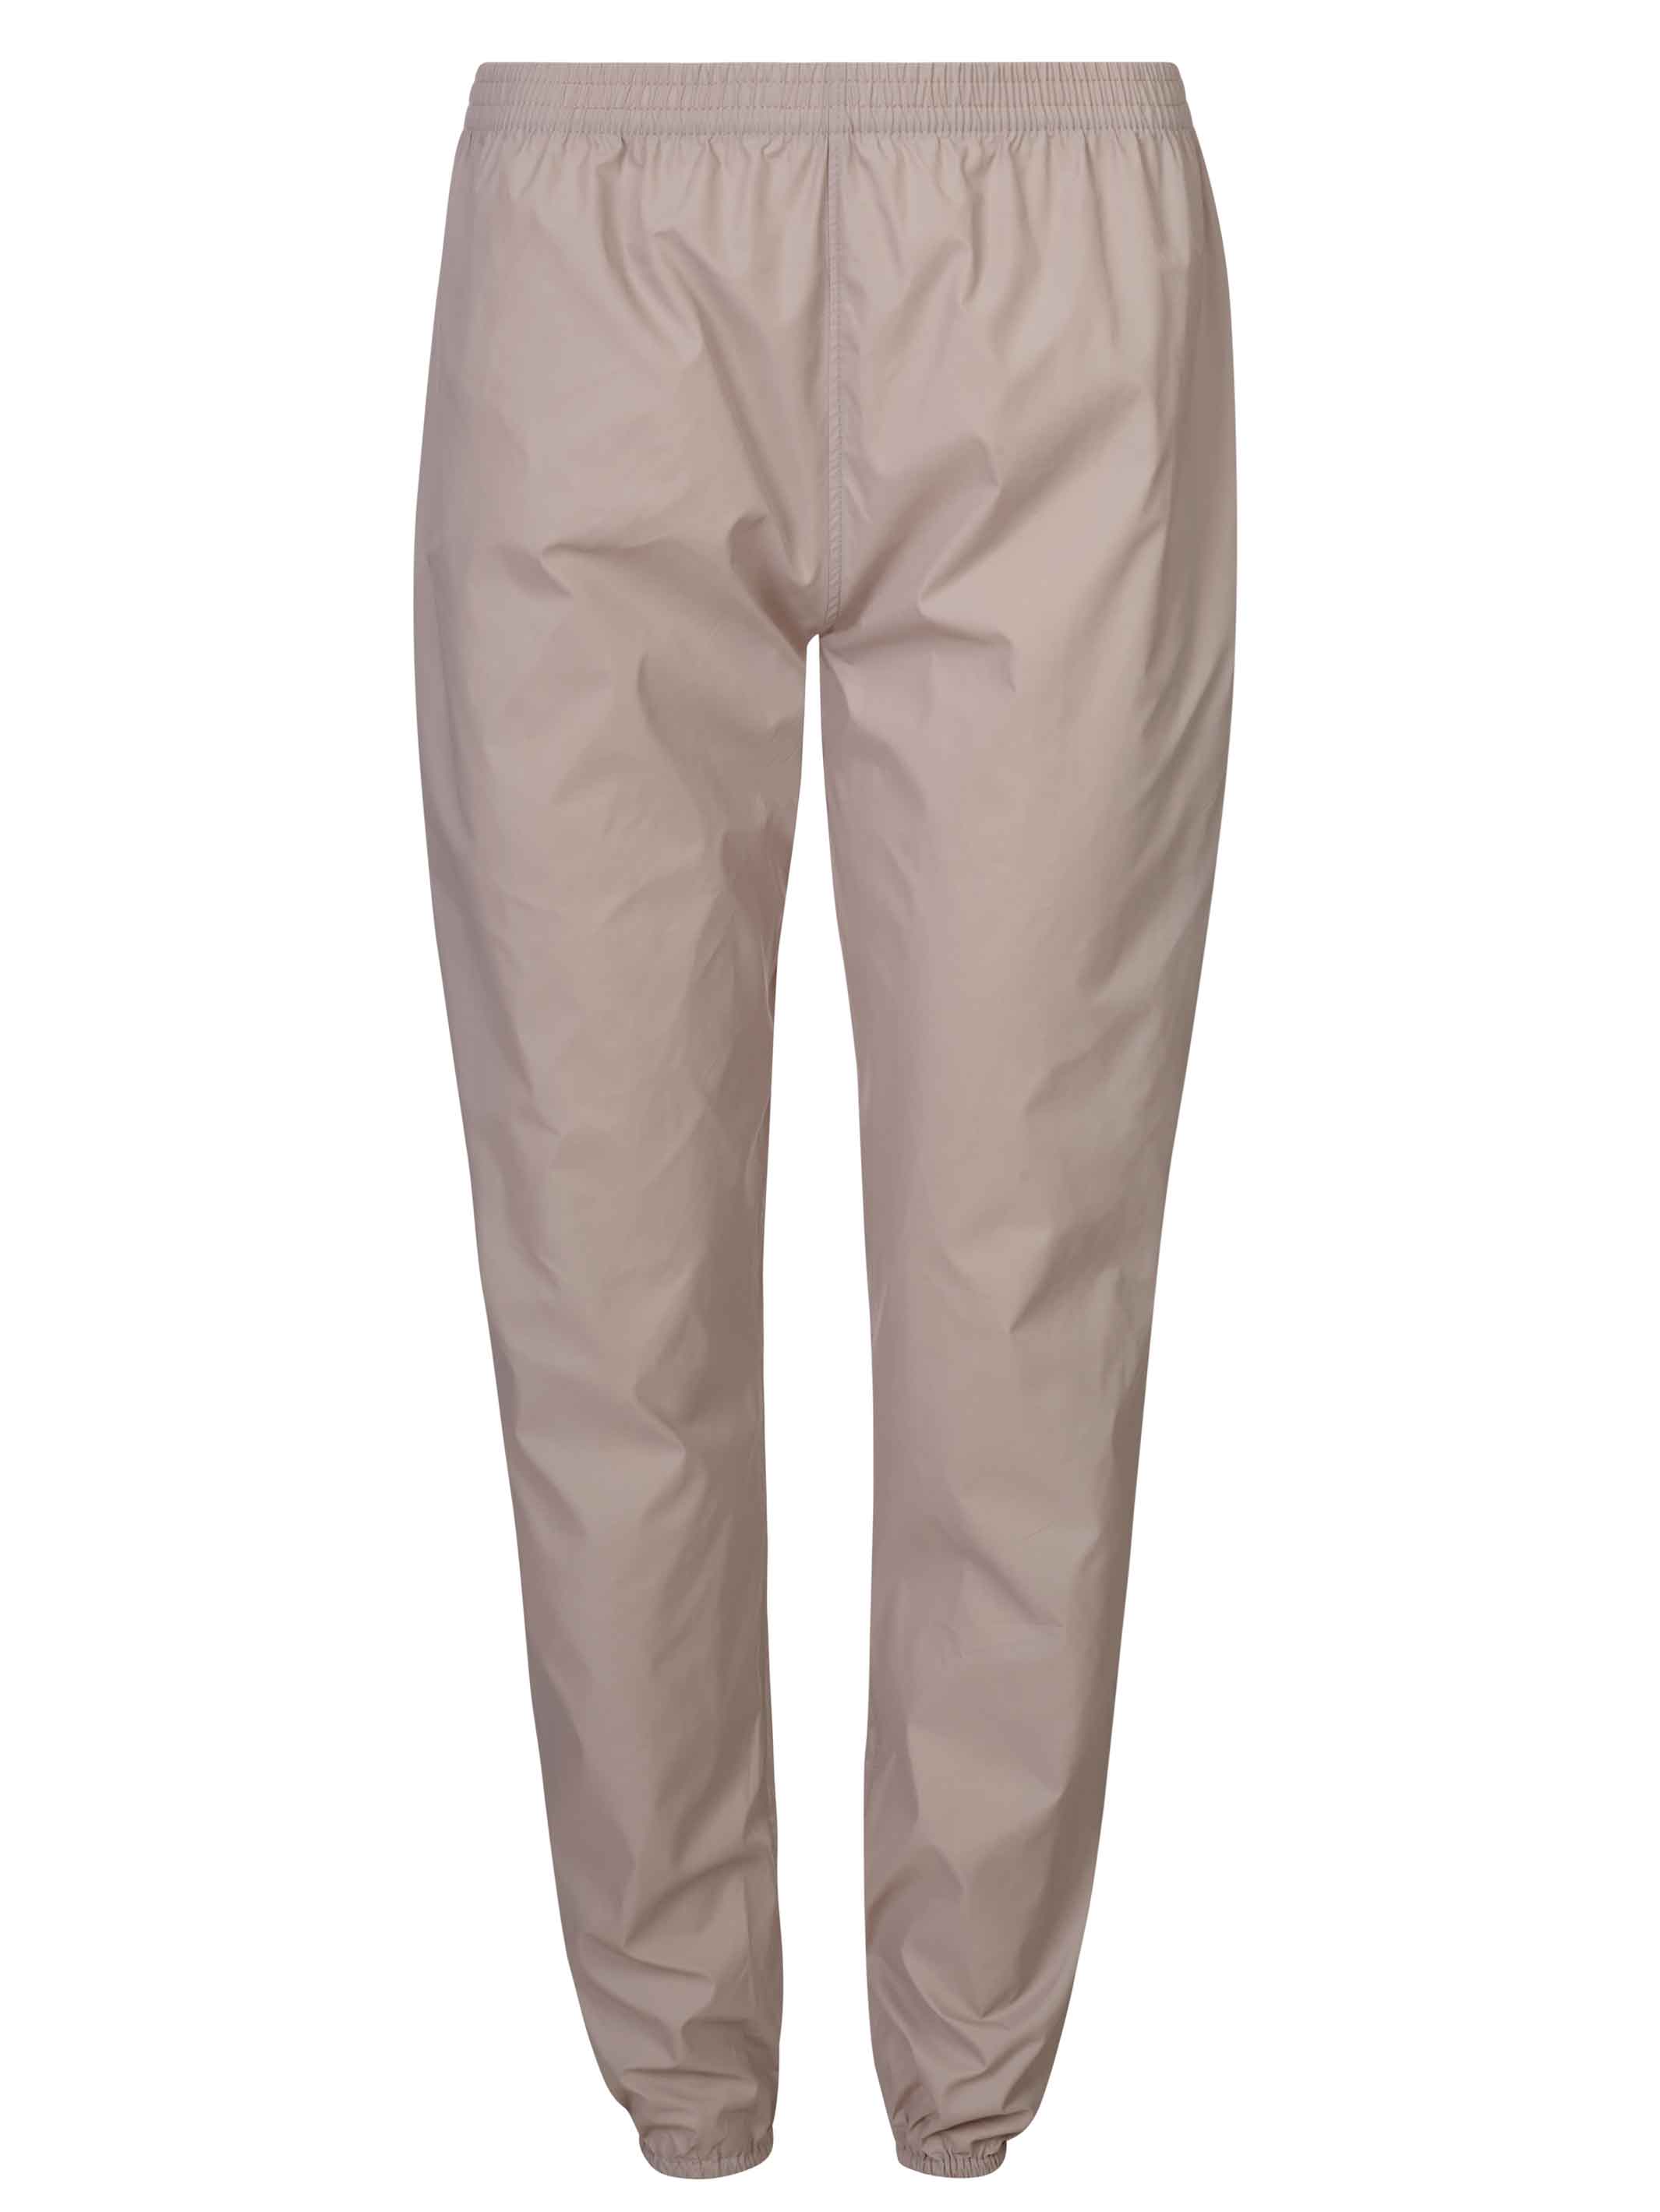 Light Gray Warm-up pants